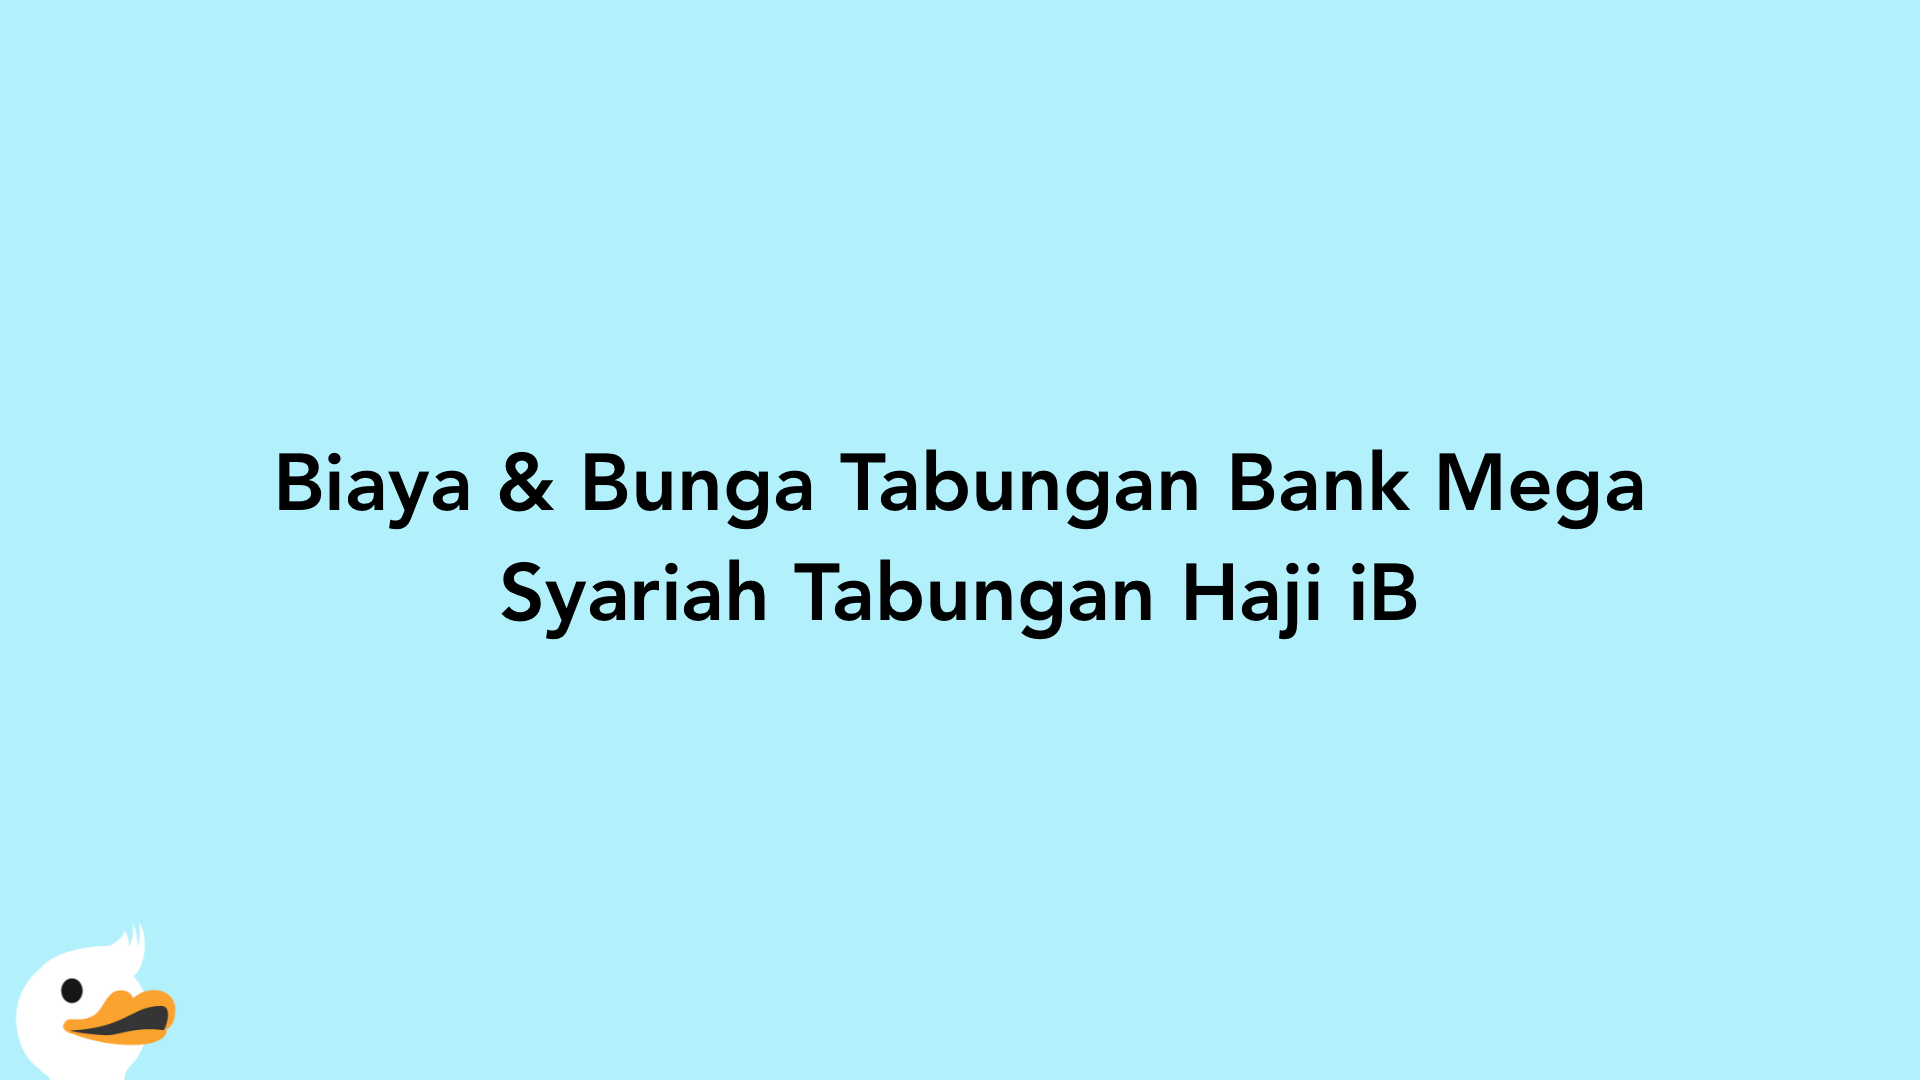 Biaya & Bunga Tabungan Bank Mega Syariah Tabungan Haji iB